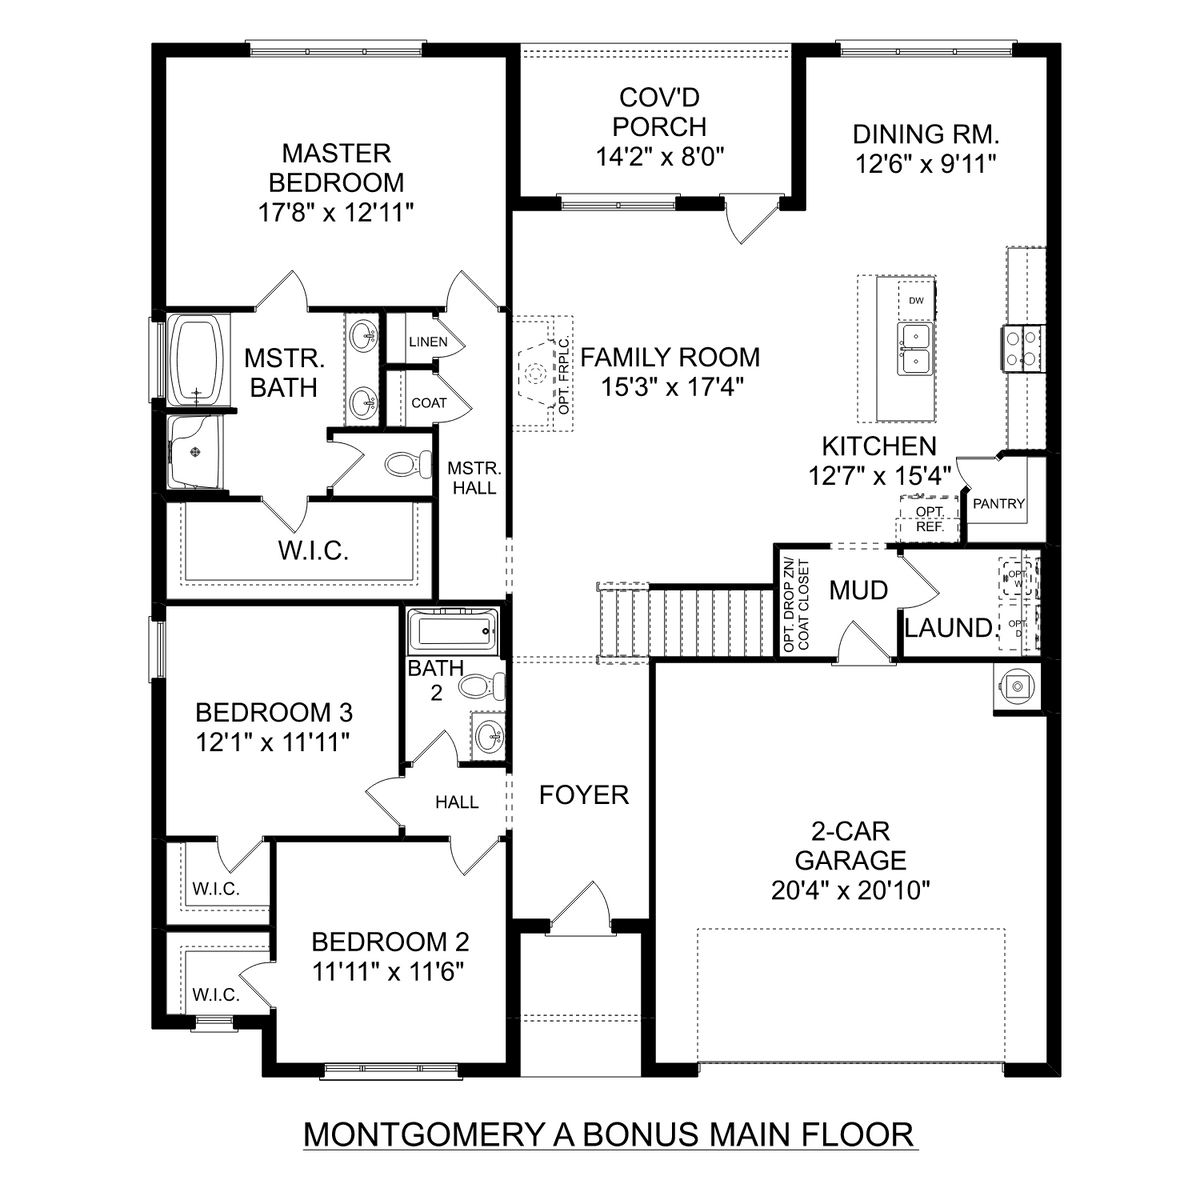 1 - The Montgomery with Bonus floor plan layout for 611 Magnolia Cove Lane SW in Davidson Homes' Magnolia Preserve community.